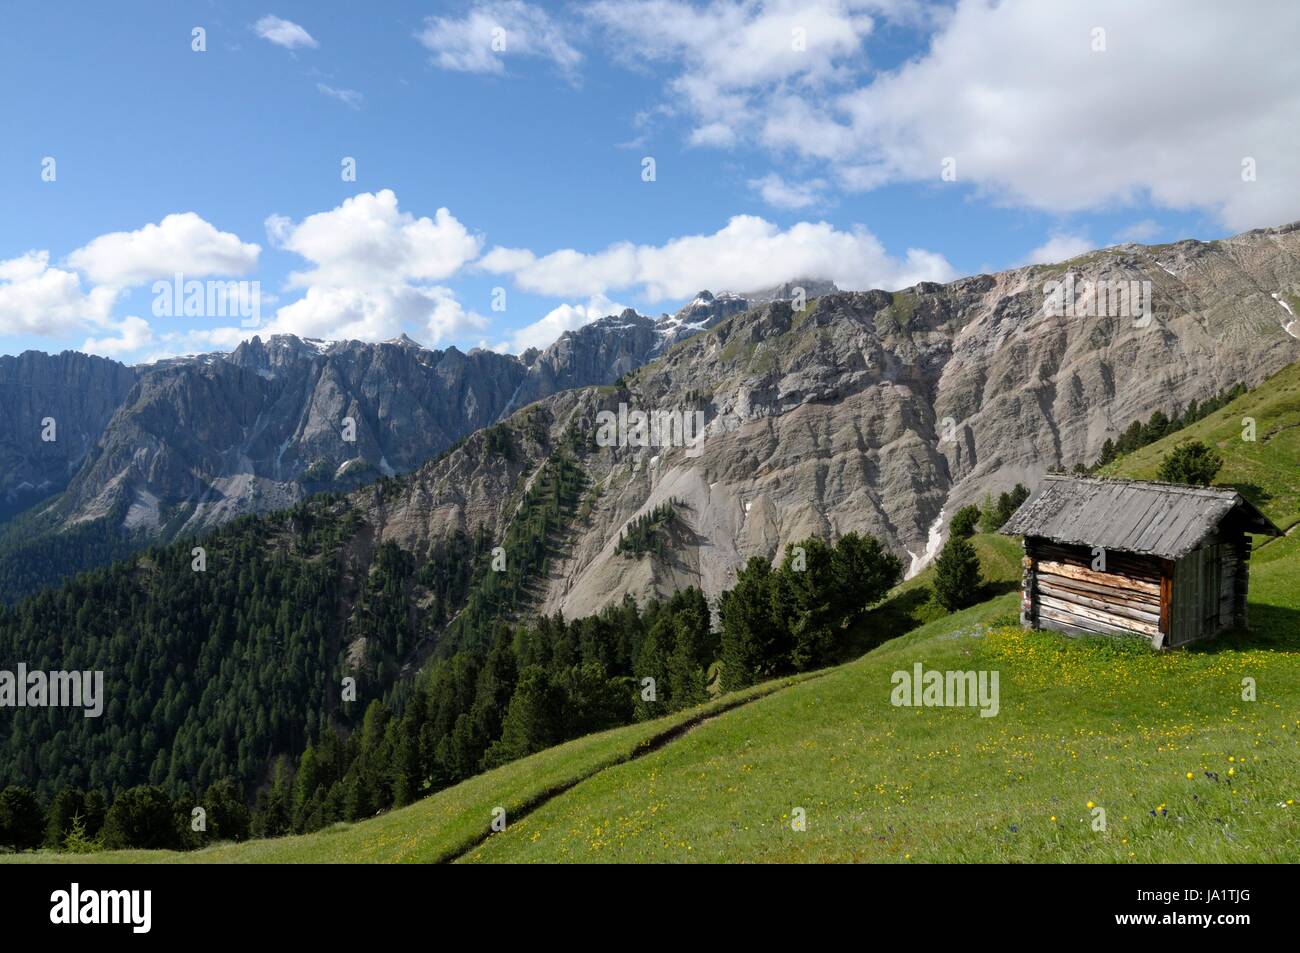 dolomites, alp, mountains, dolomites, alp, south tyrol, italy, almhtte, amhtte, Stock Photo